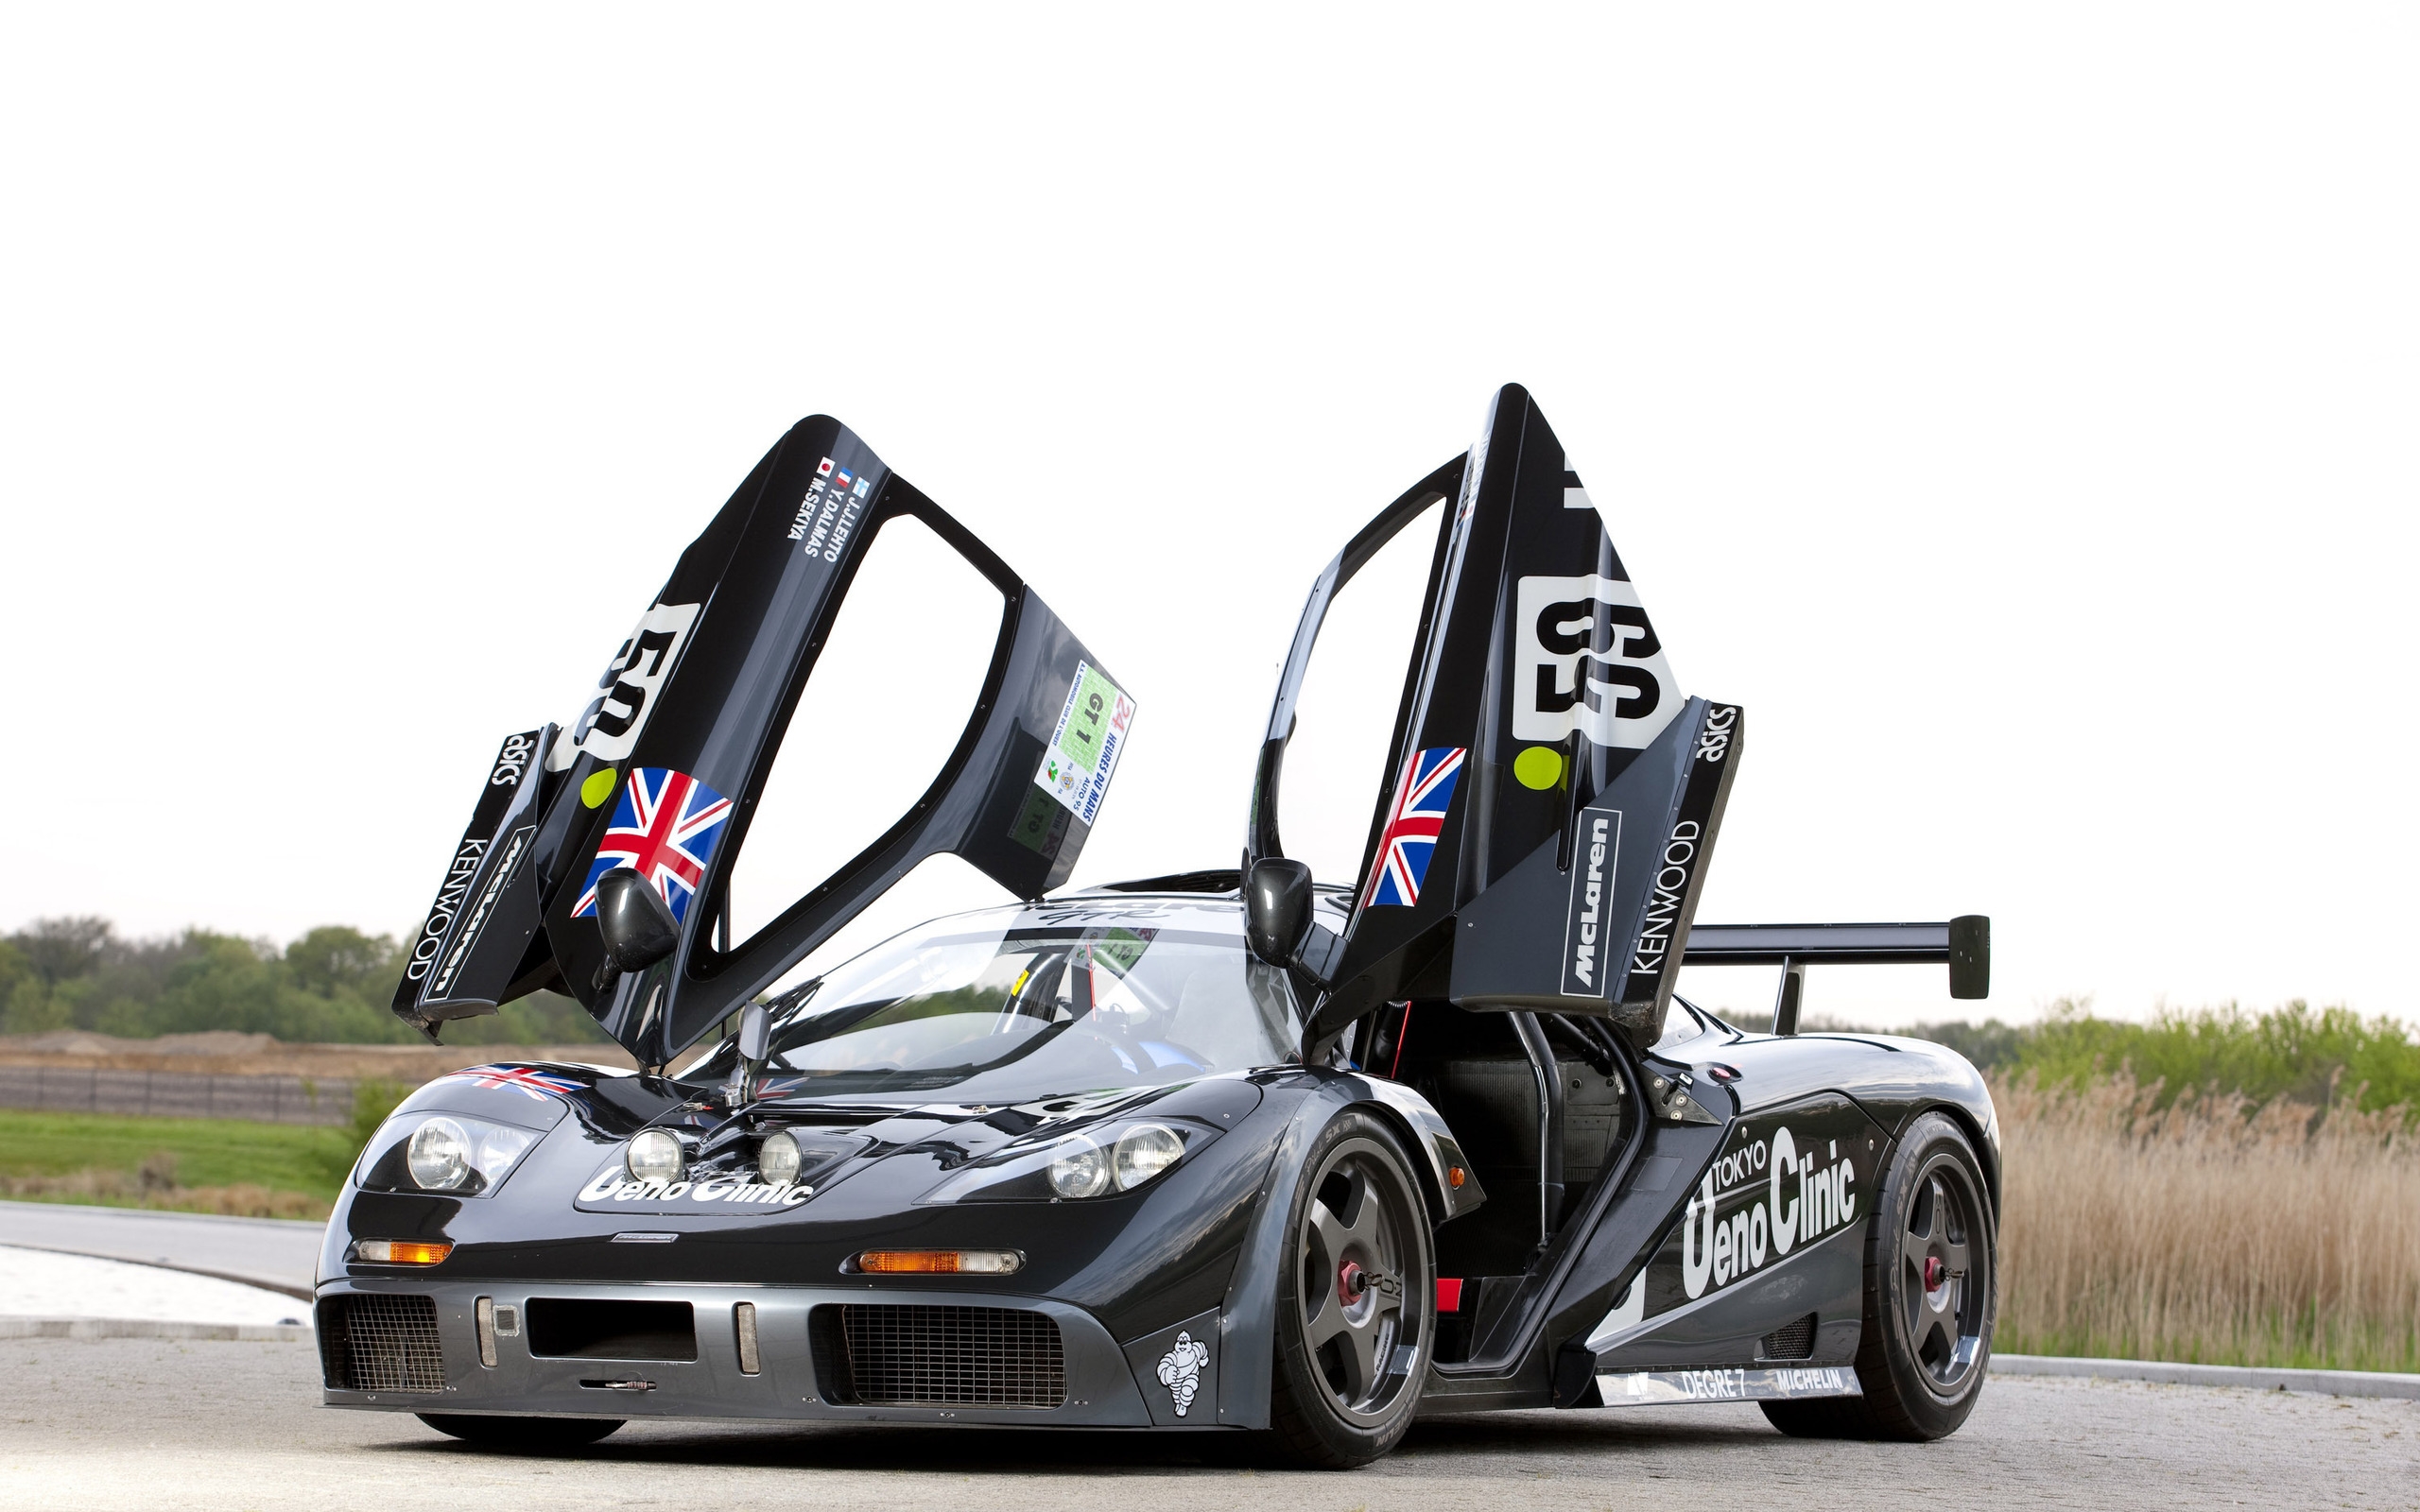 General 2560x1600 car McLaren McLaren F1 vehicle supercars black cars livery British cars car spoiler